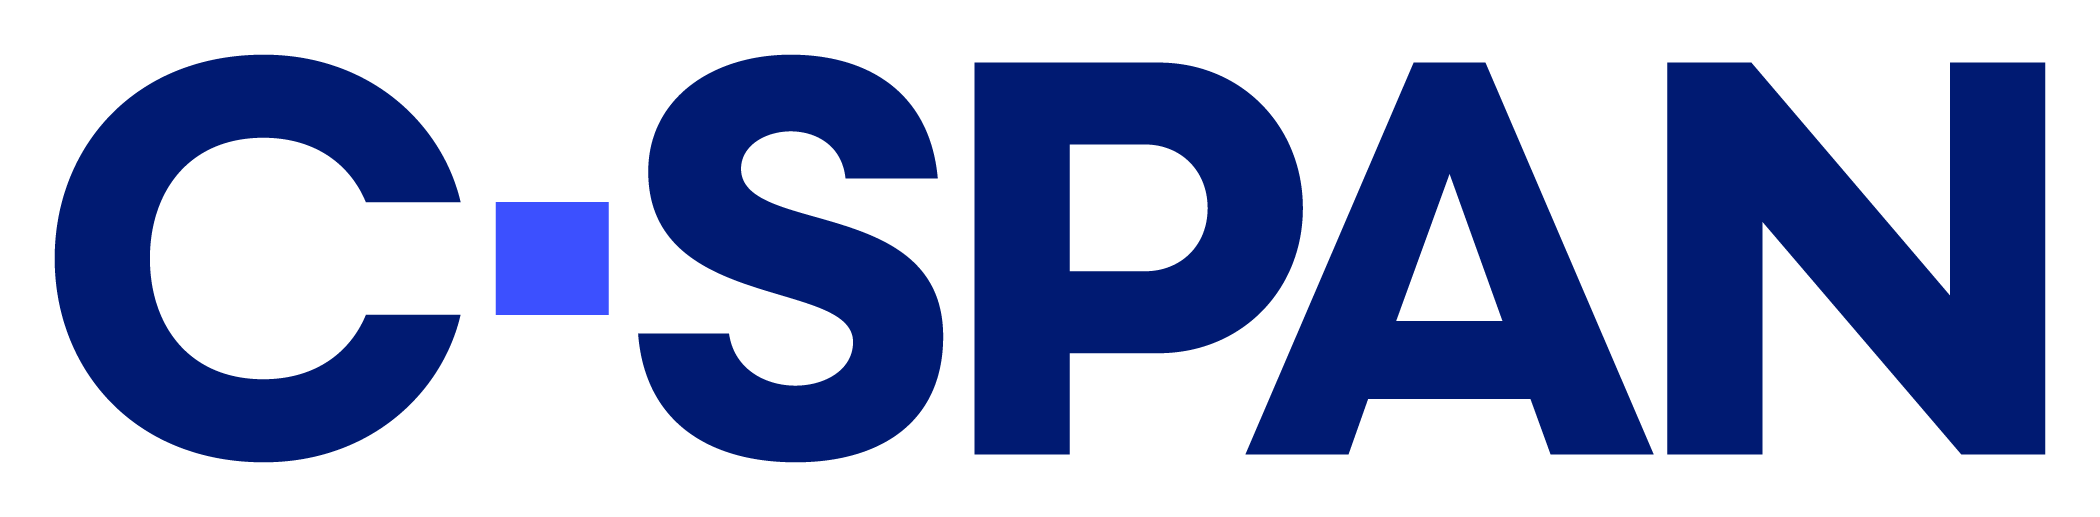 C-SPAN Logo - Brand New: New Logo for C-SPAN by Grafik